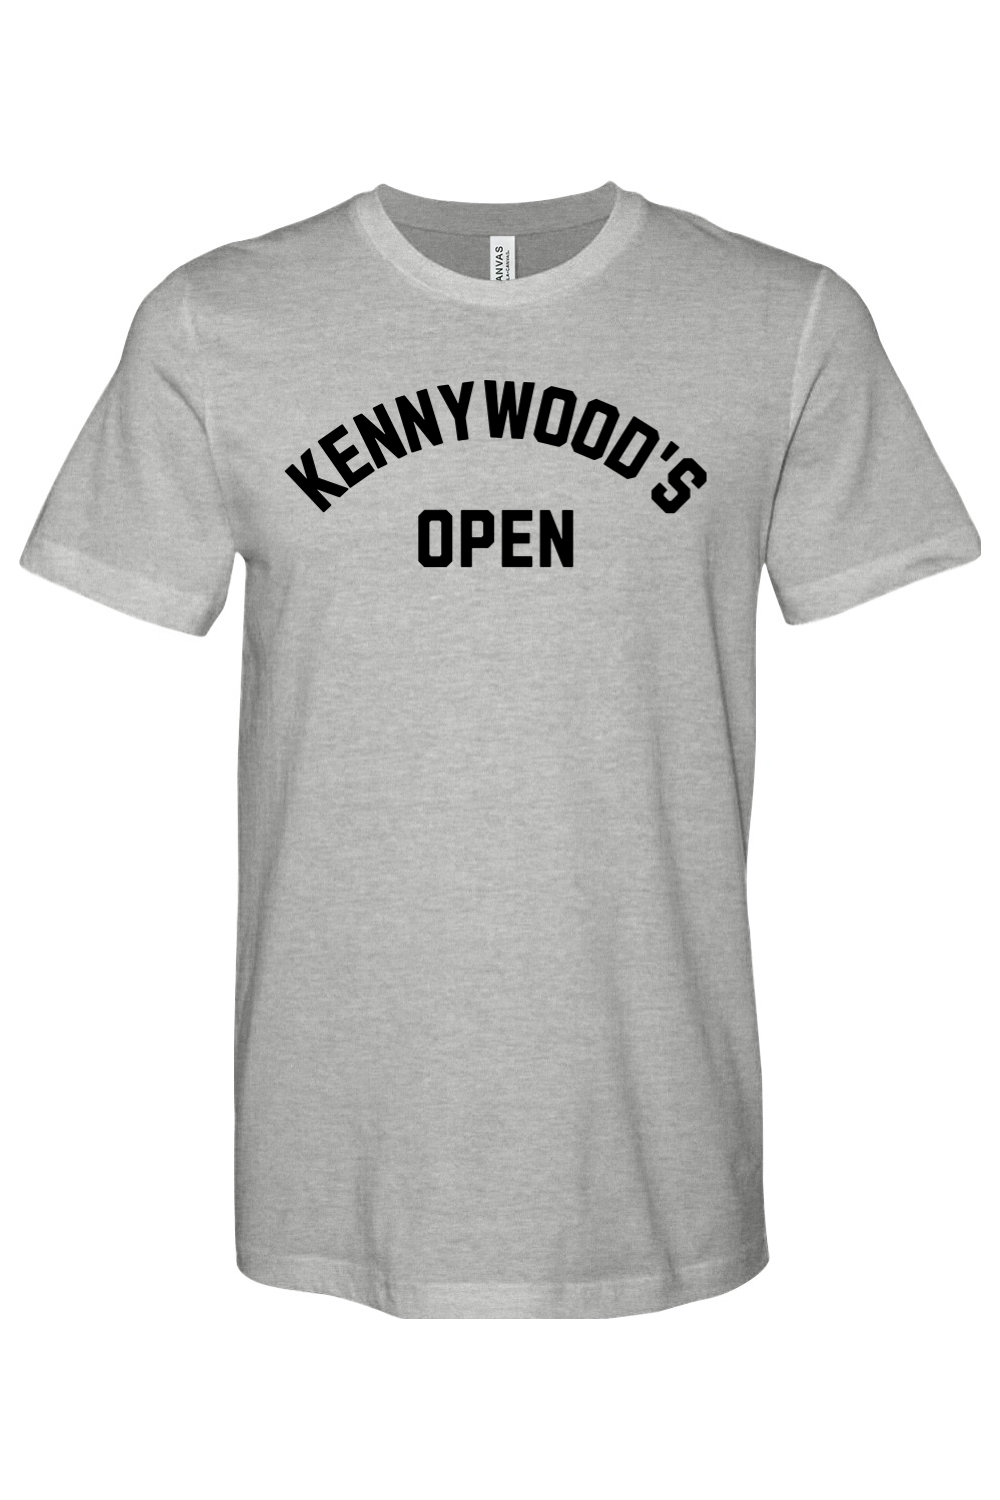 Kennywood's Open - Yinzylvania